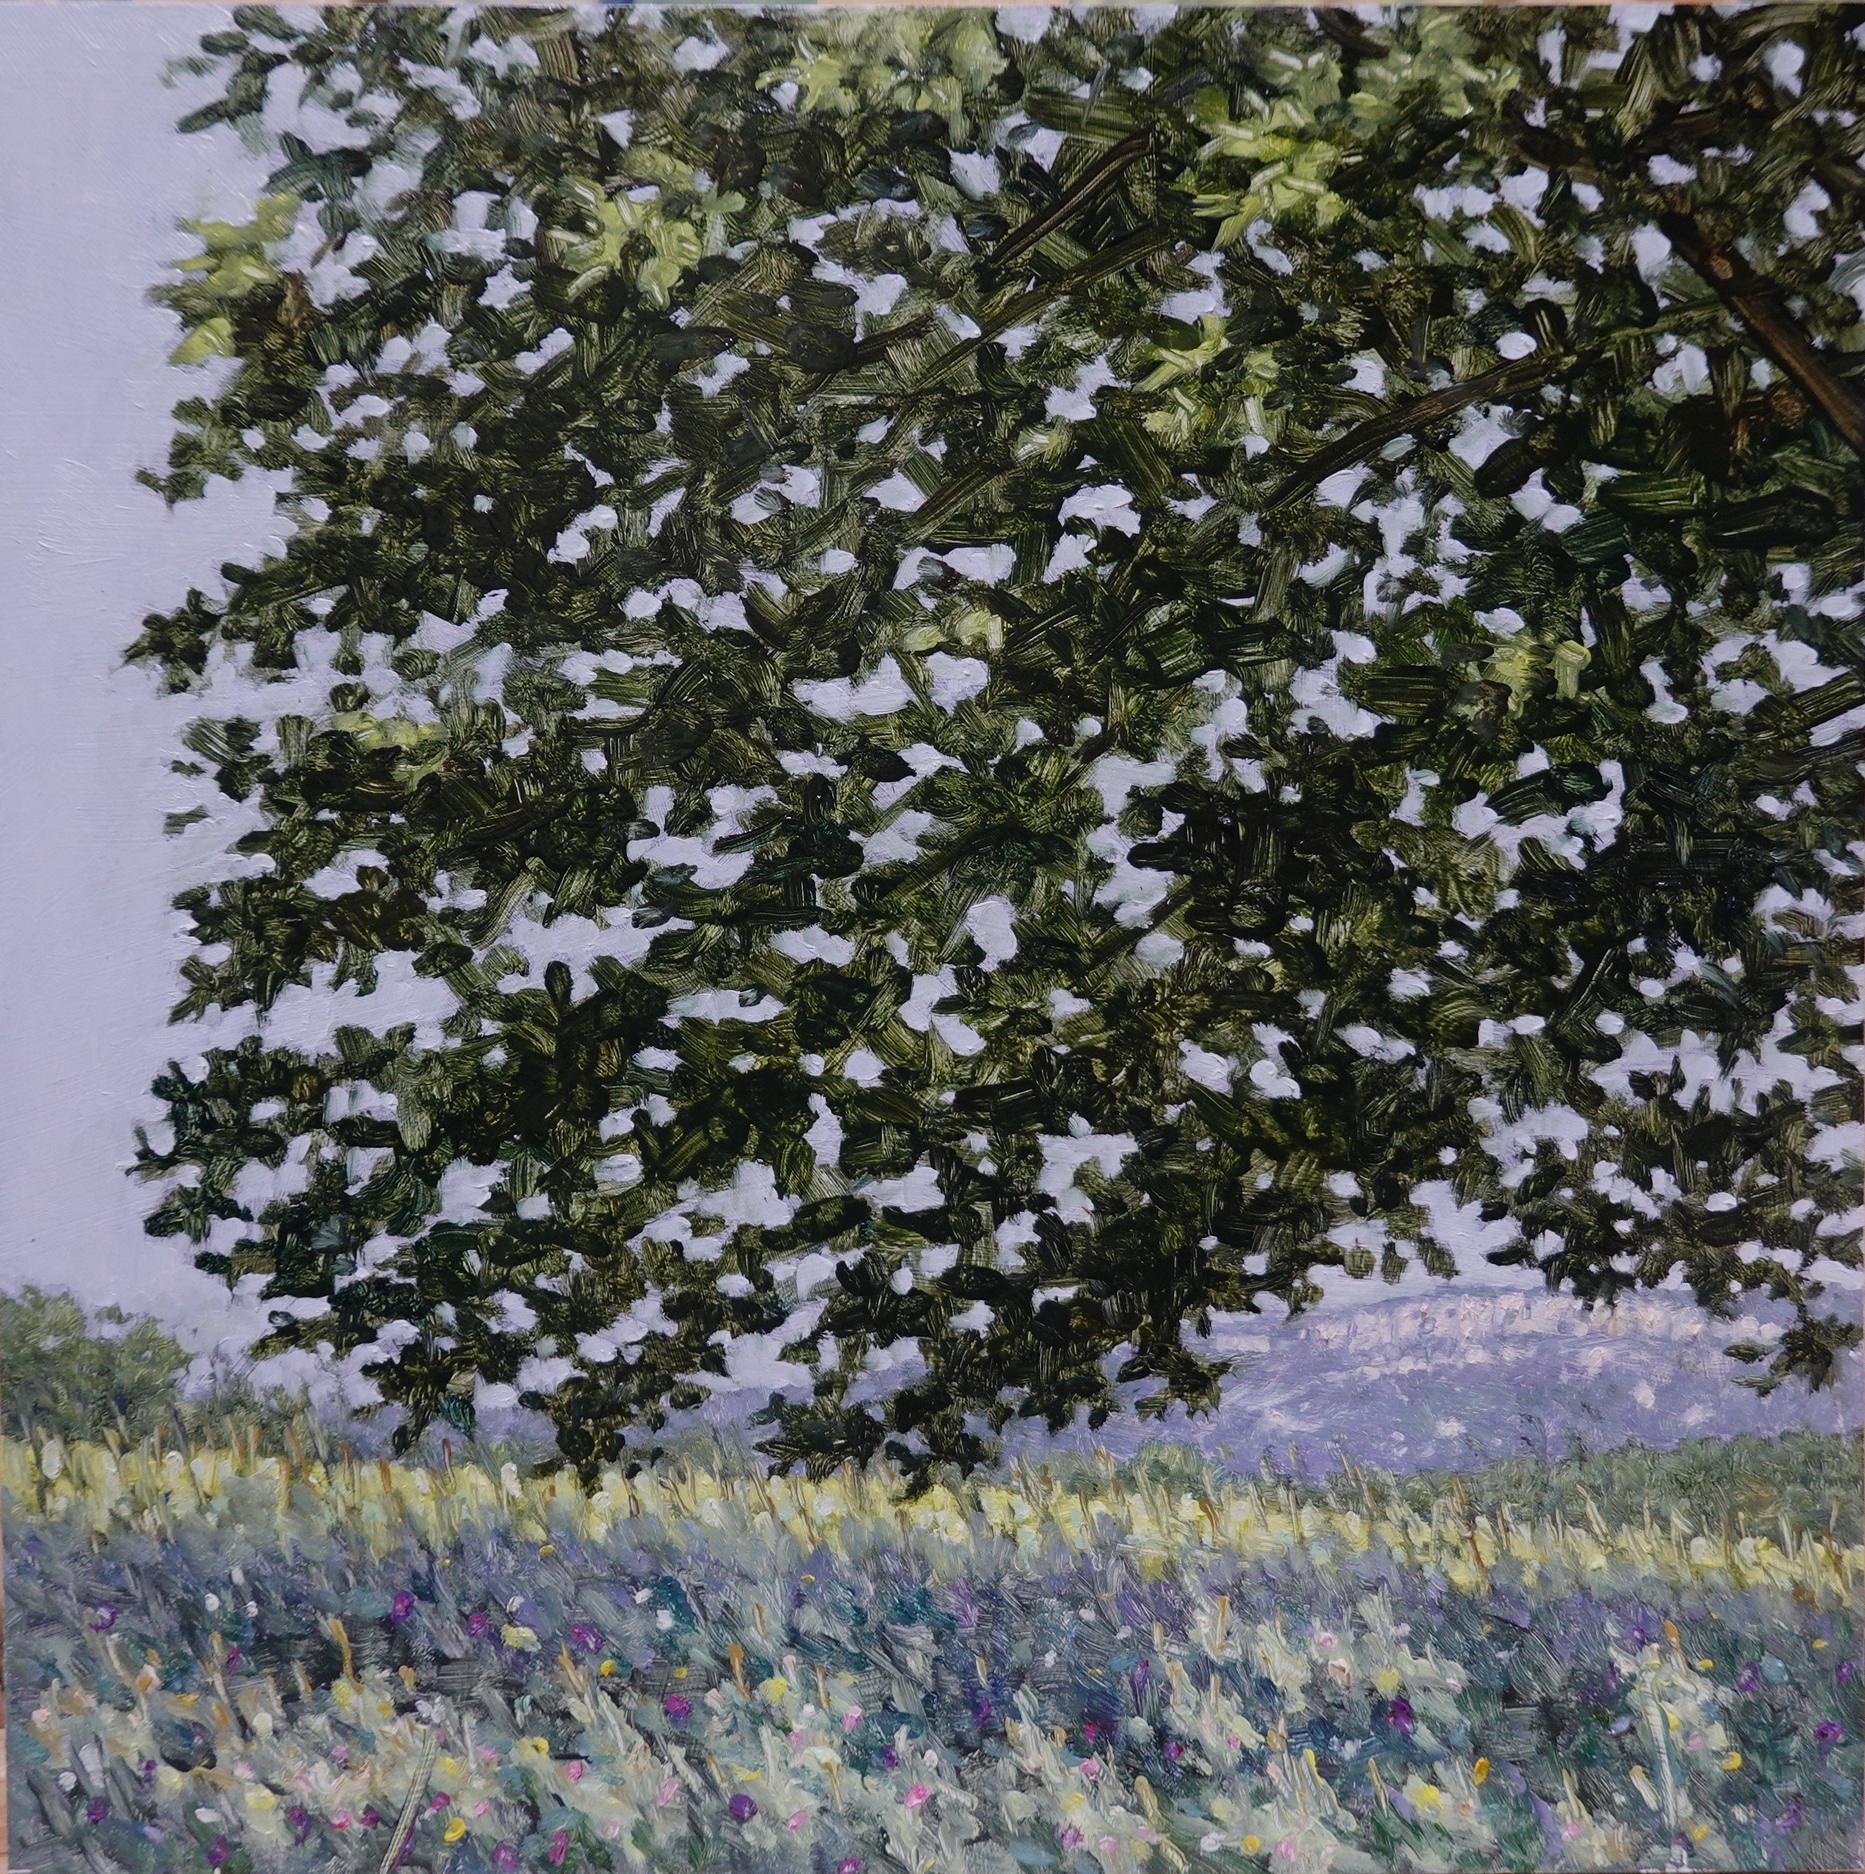 Thomas Sarrantonio Landscape Painting - Field Painting June 23 2021, Summer Landscape, Green Tree, Purple Flowers